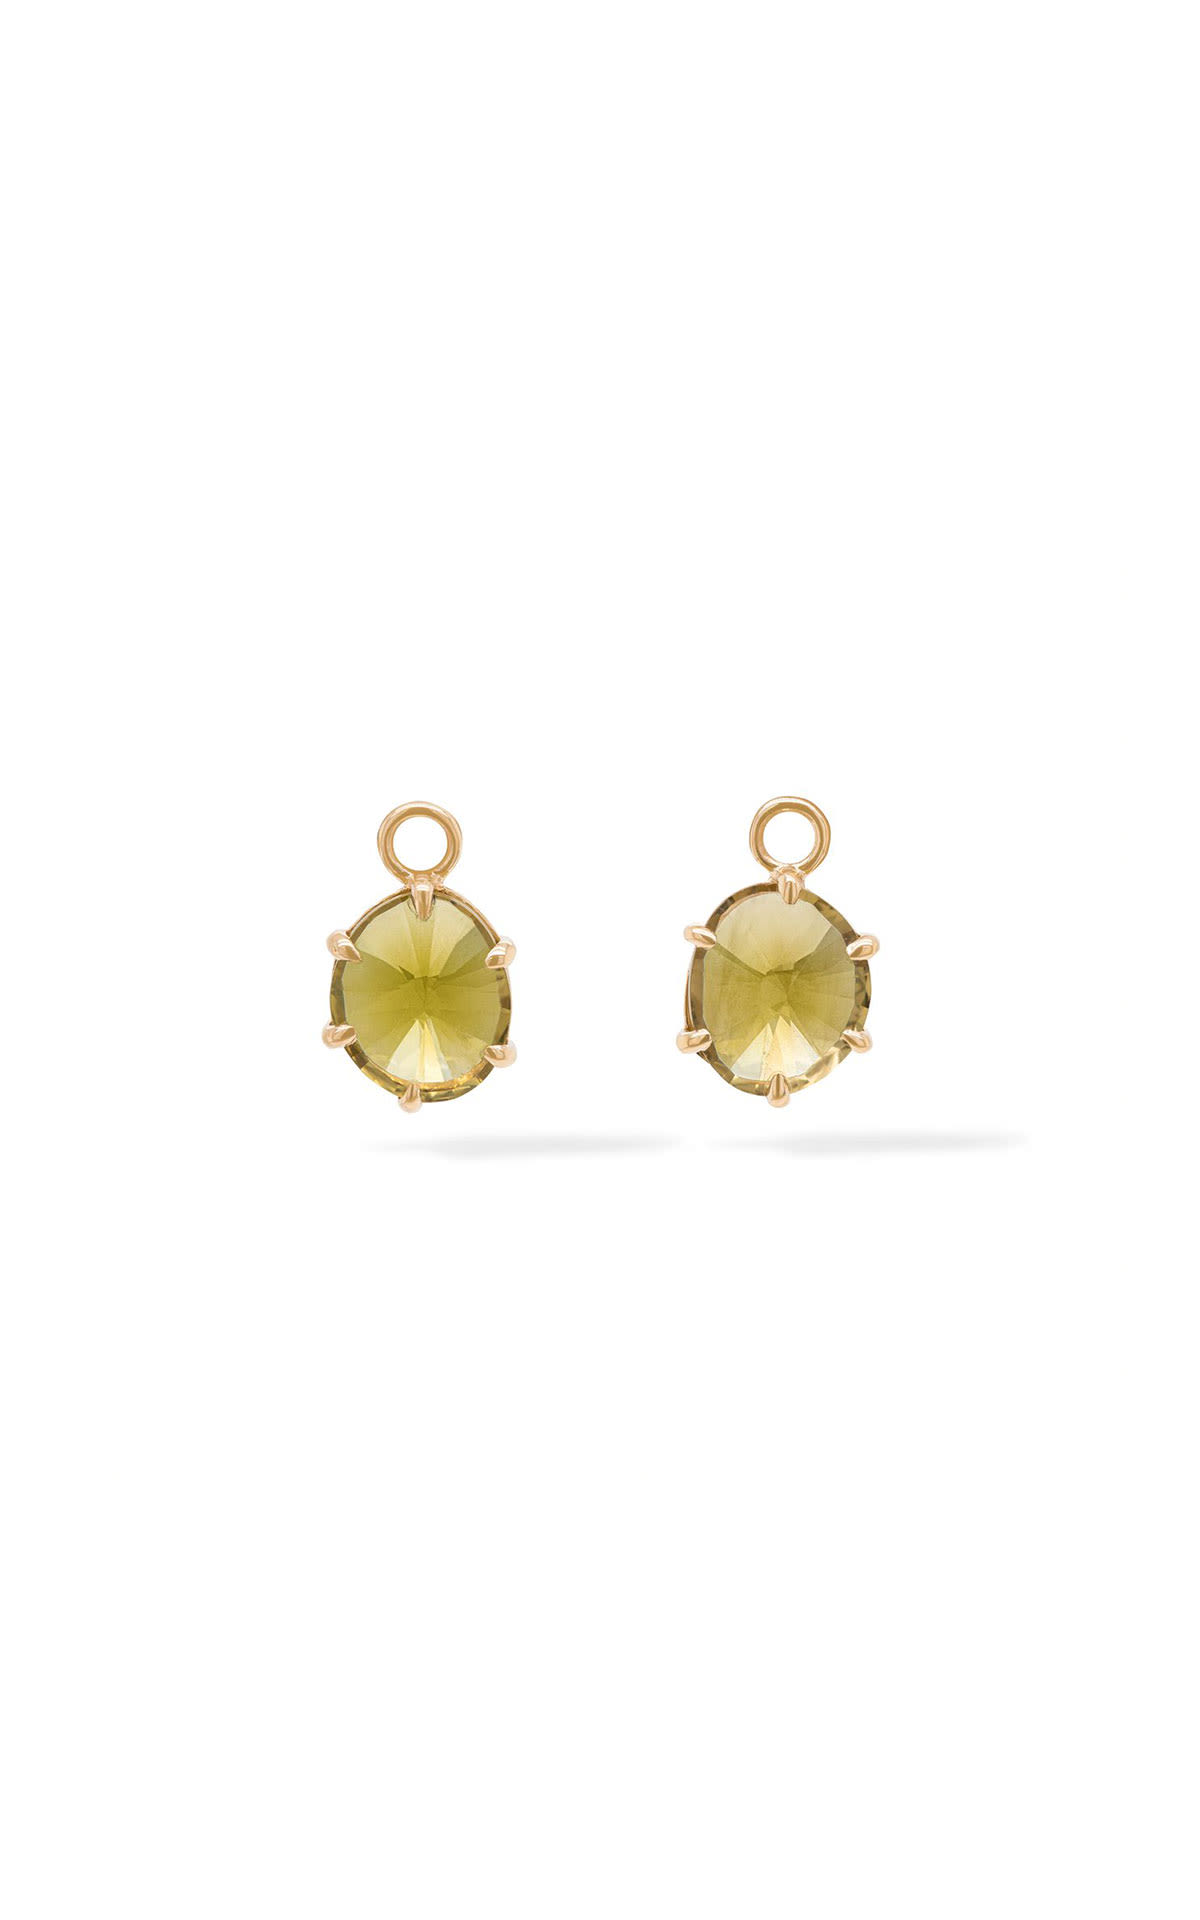 Annoushka Olive quartz large earring drops from Bicester Village